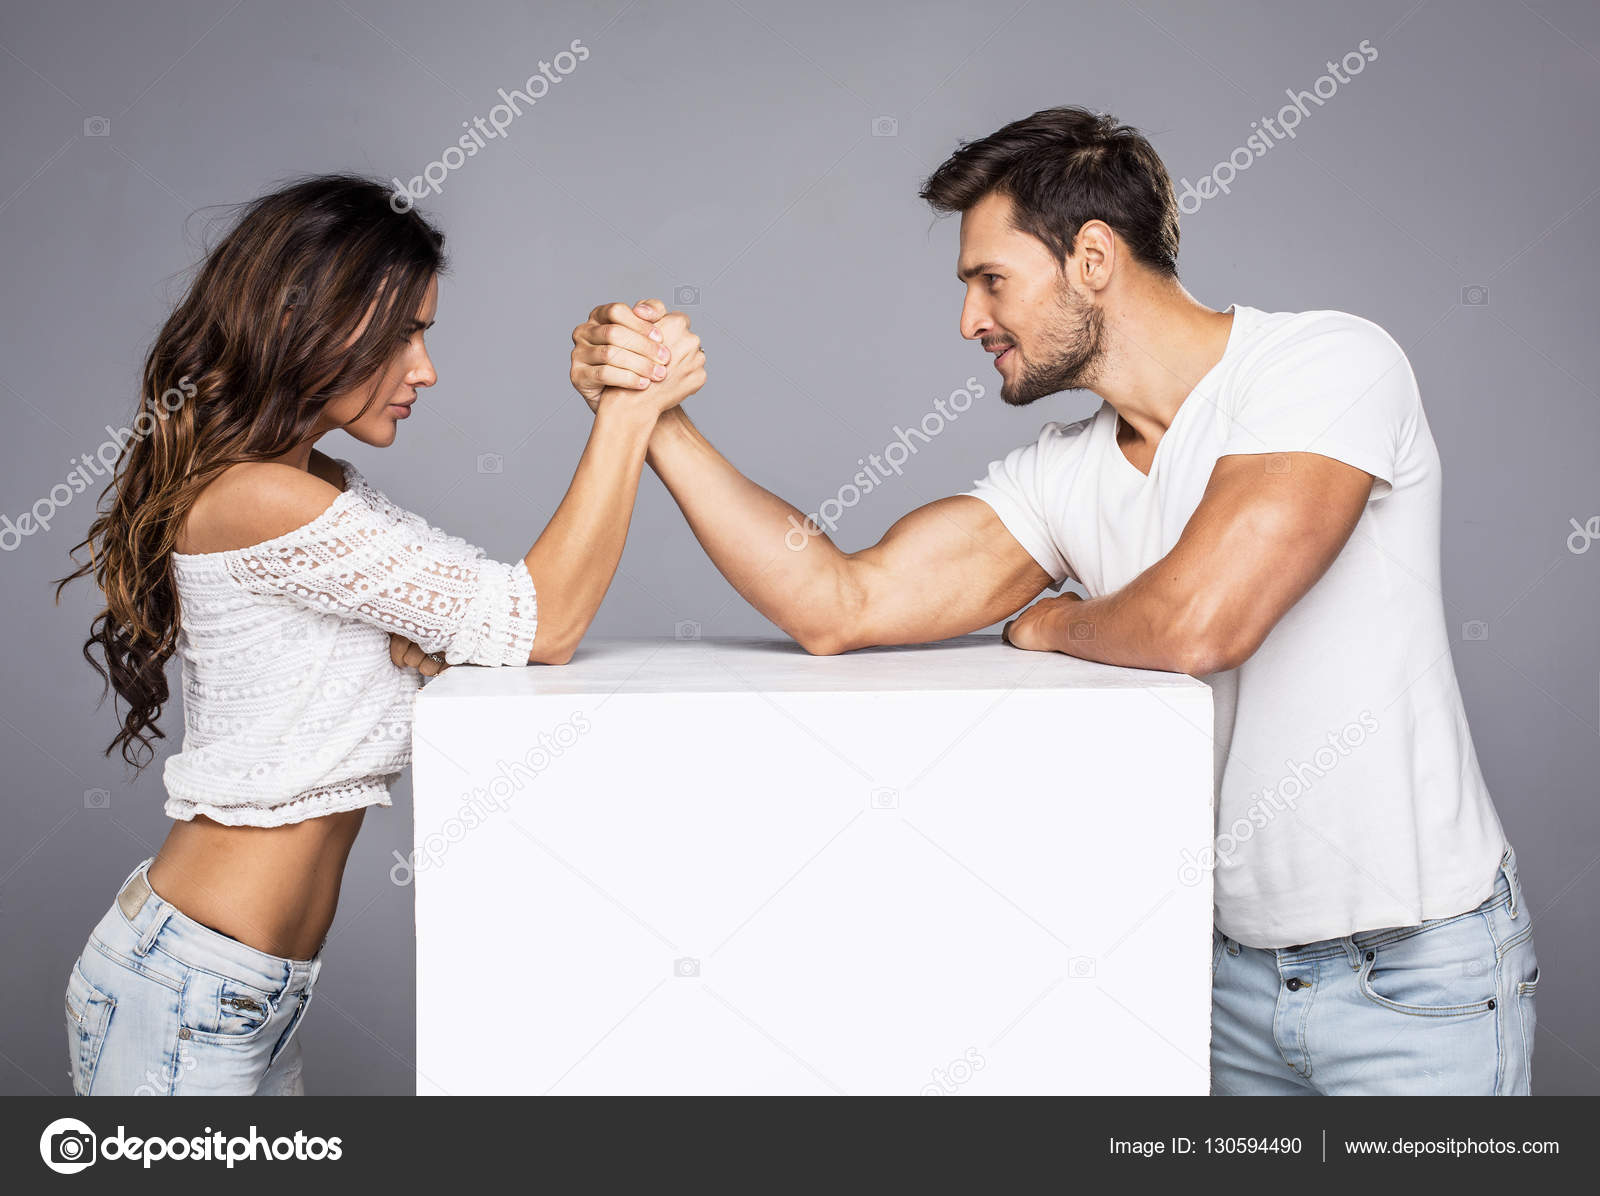 https://st3.depositphotos.com/2056297/13059/i/1600/depositphotos_130594490-stock-photo-young-cute-couple.jpg